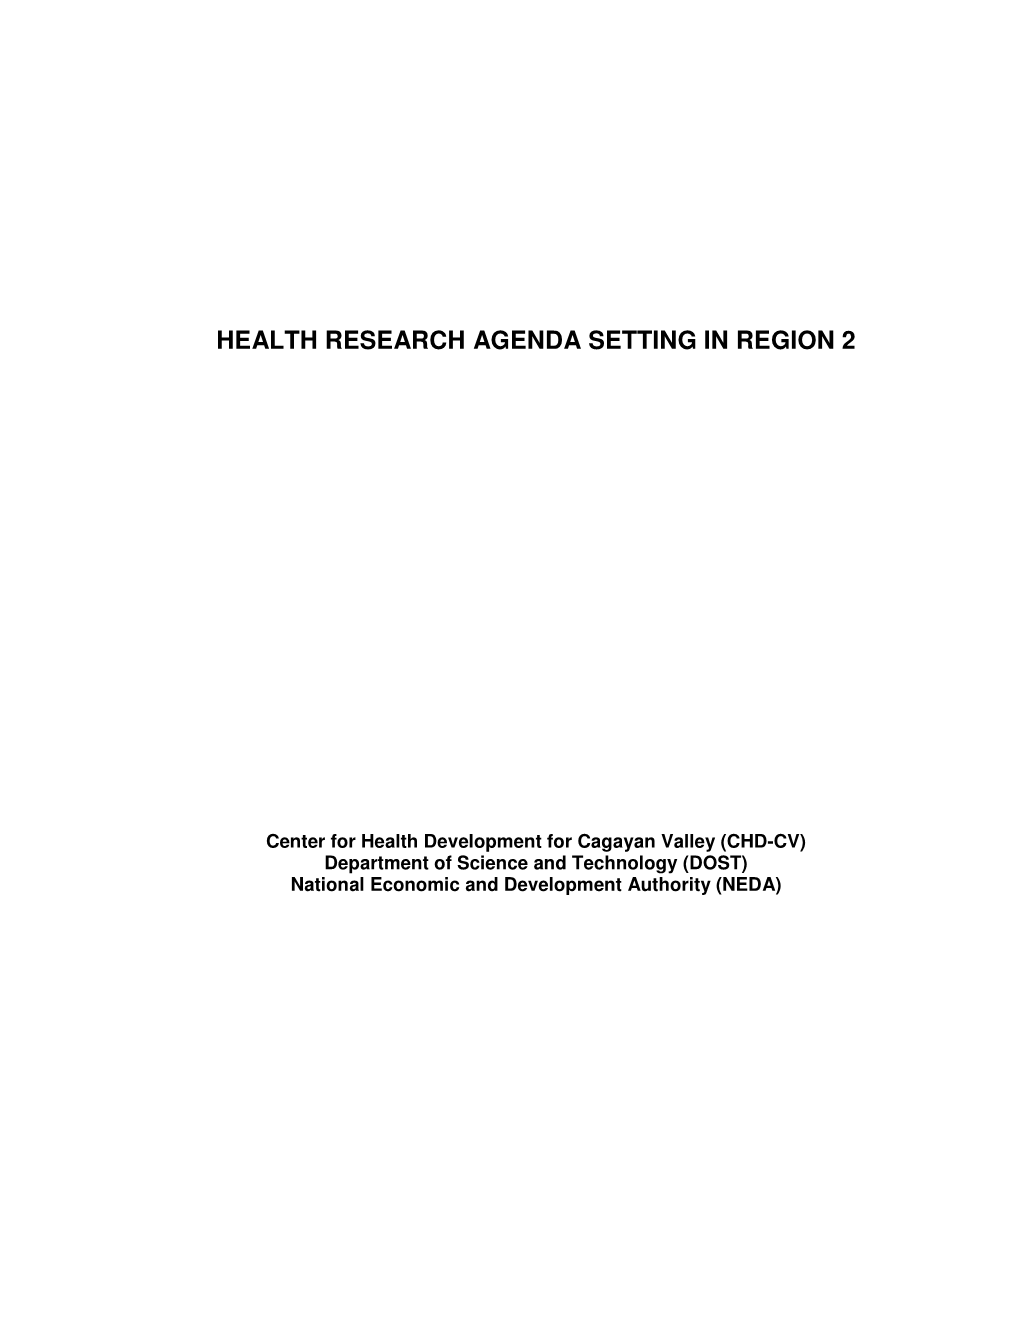 Health Research Agenda Setting in Region 2